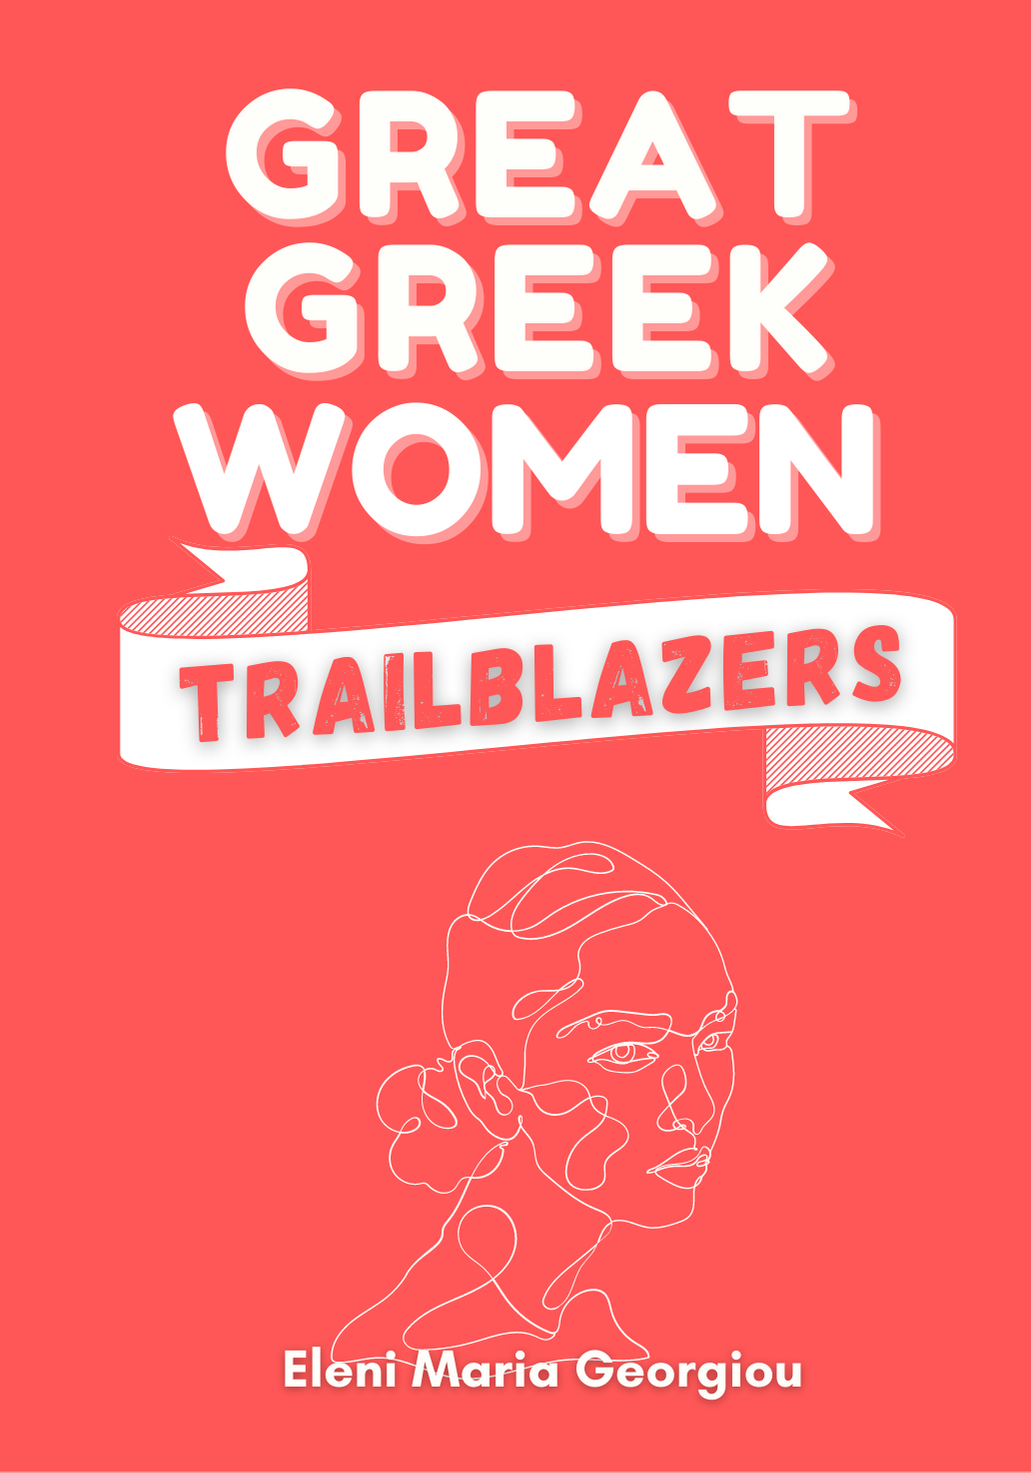 Great Greek Women Trailblazers (English text only)